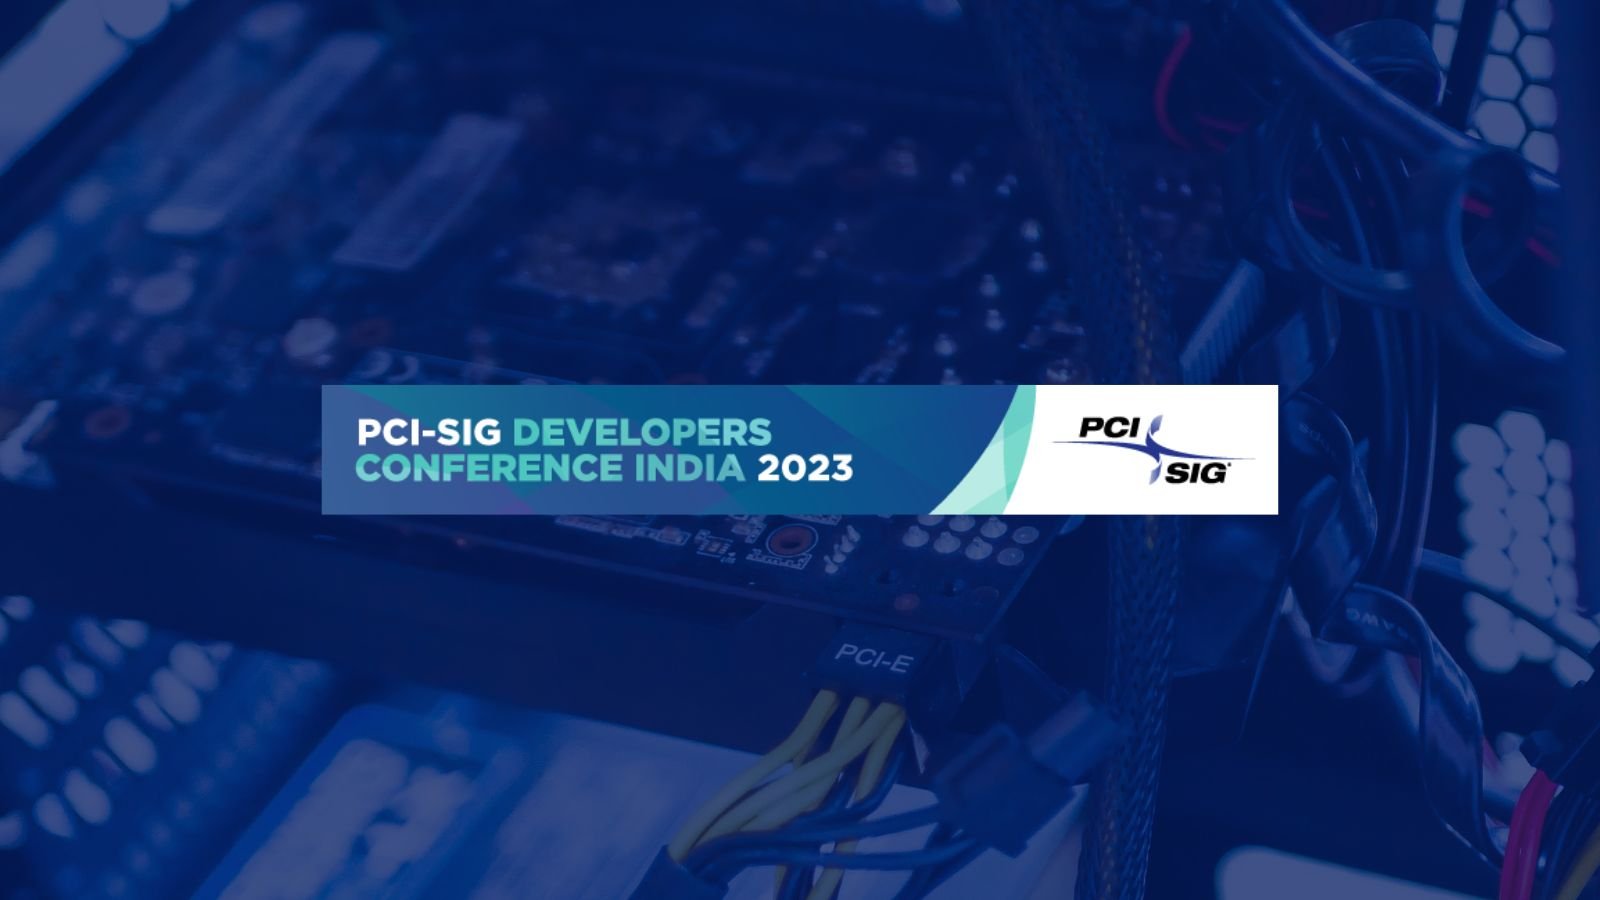 PCI-SIG DevCon India 2023 event